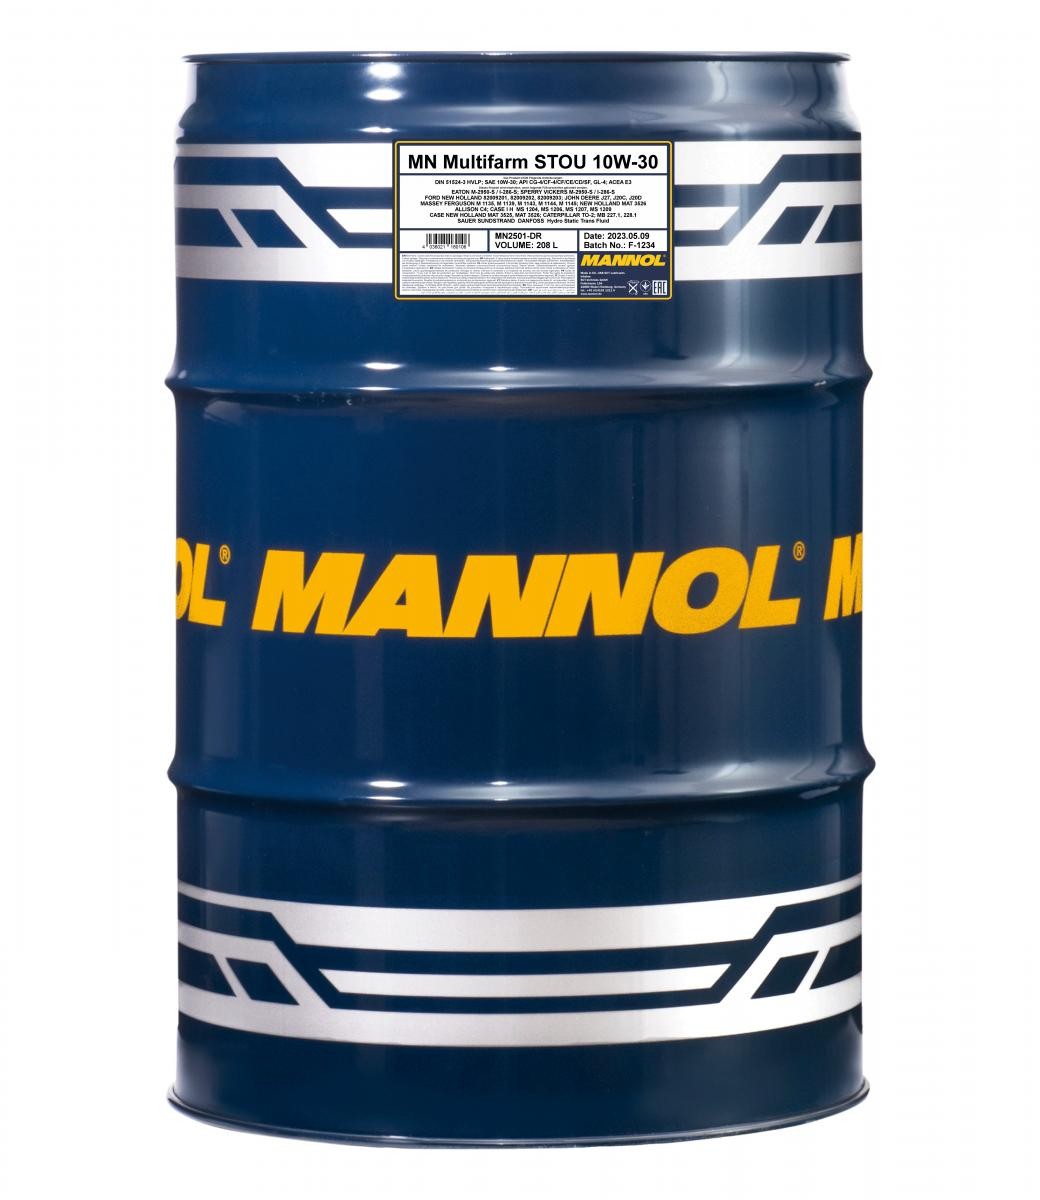 MN2501-DR MANNOL Multifarm, STOU 10W-30, 208l, Mineralöl Motoröl MN2501-DR günstig kaufen